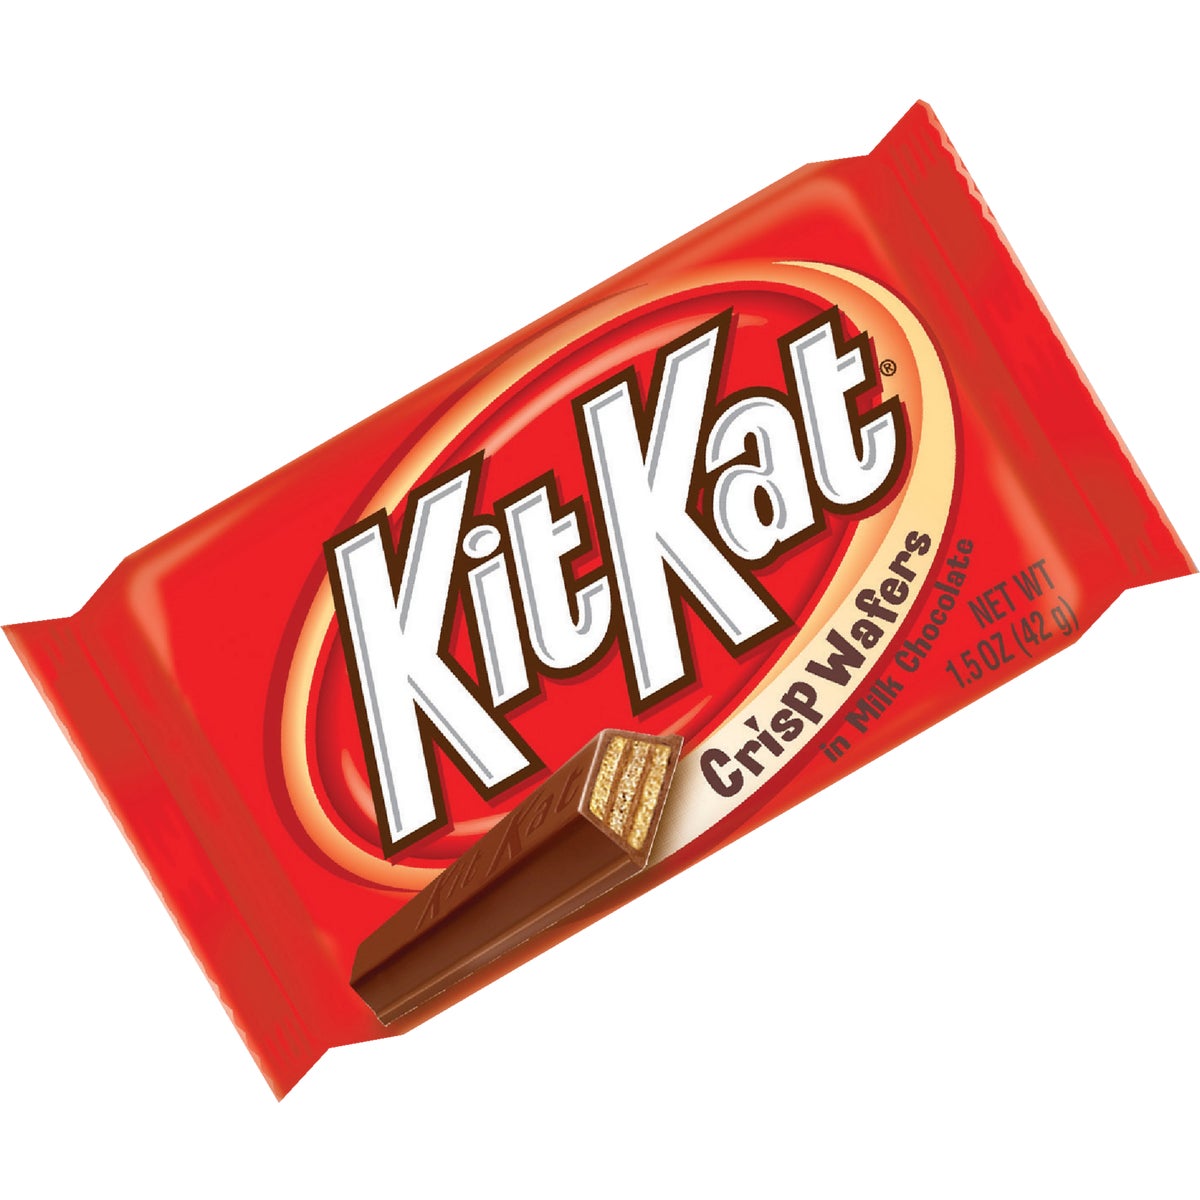 Kit Kat 1.5 Oz. Crispy Chocolate Candy Bar